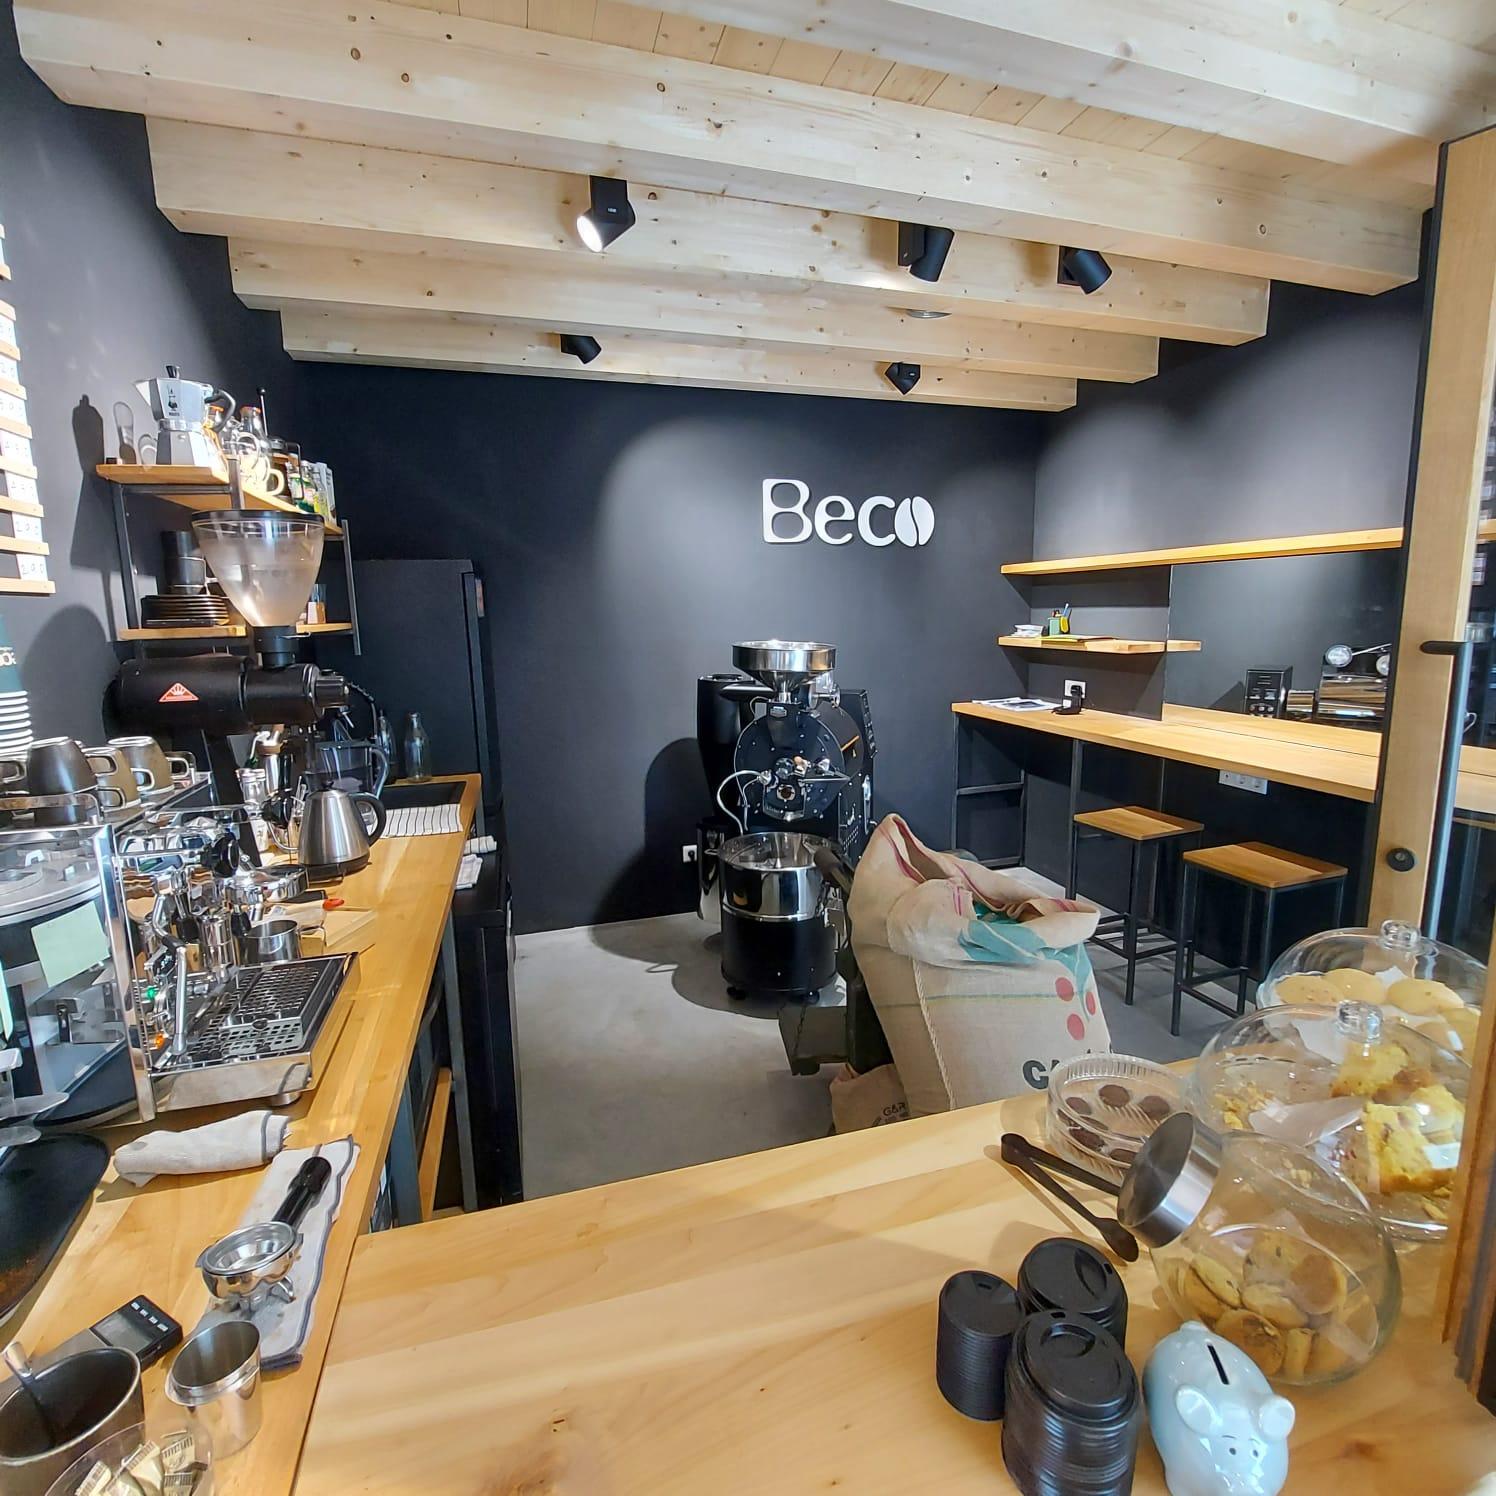 Restaurant "BECO Kaffee rösterei & Steh-Café" in Ried im Innkreis